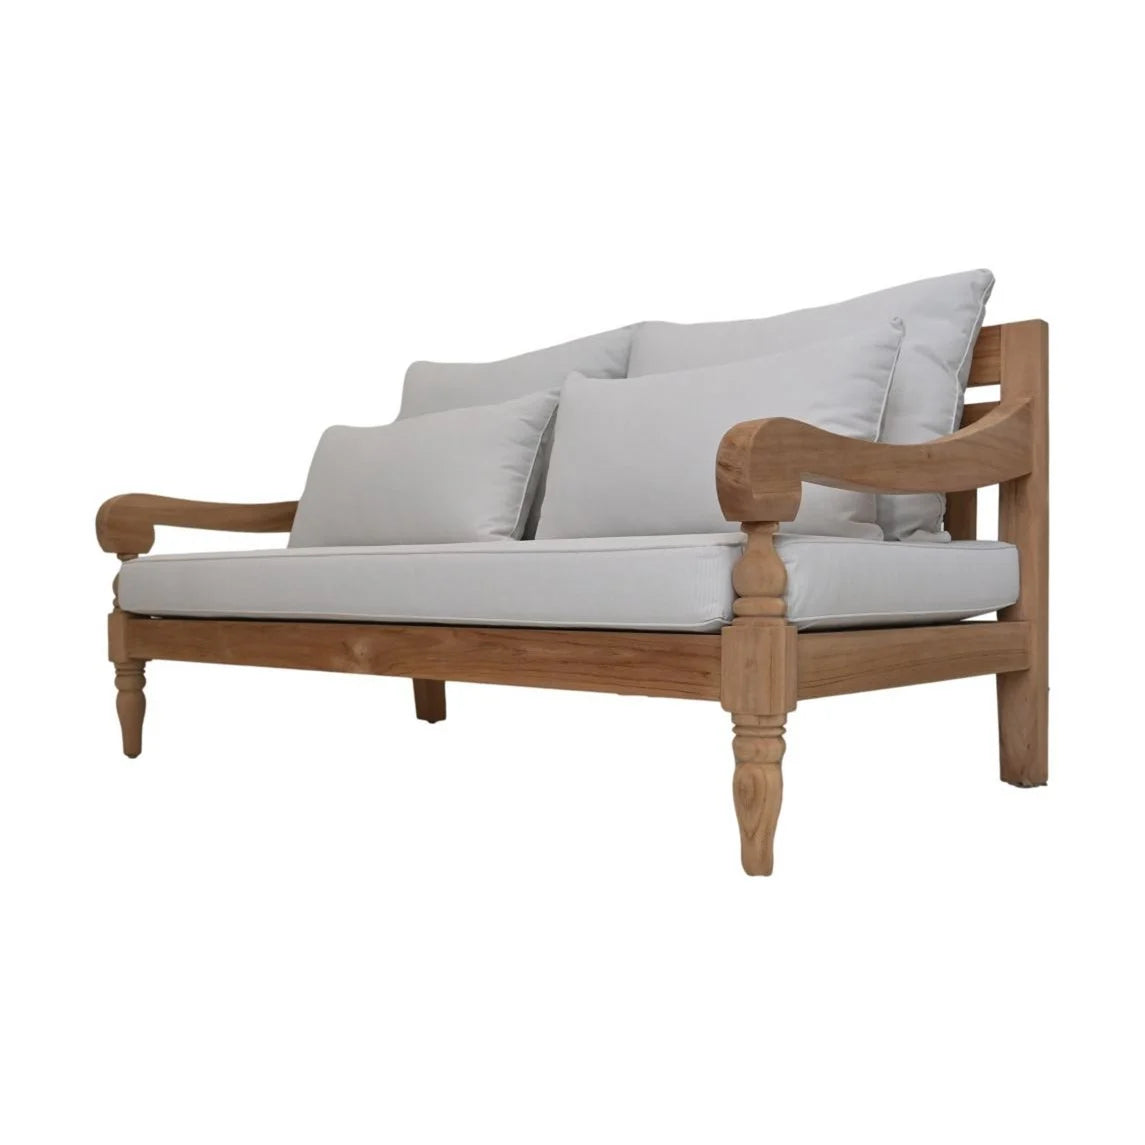 Bahama 2.5 seater sofa incl cushion - 150x95x80 - Natural/White - teak